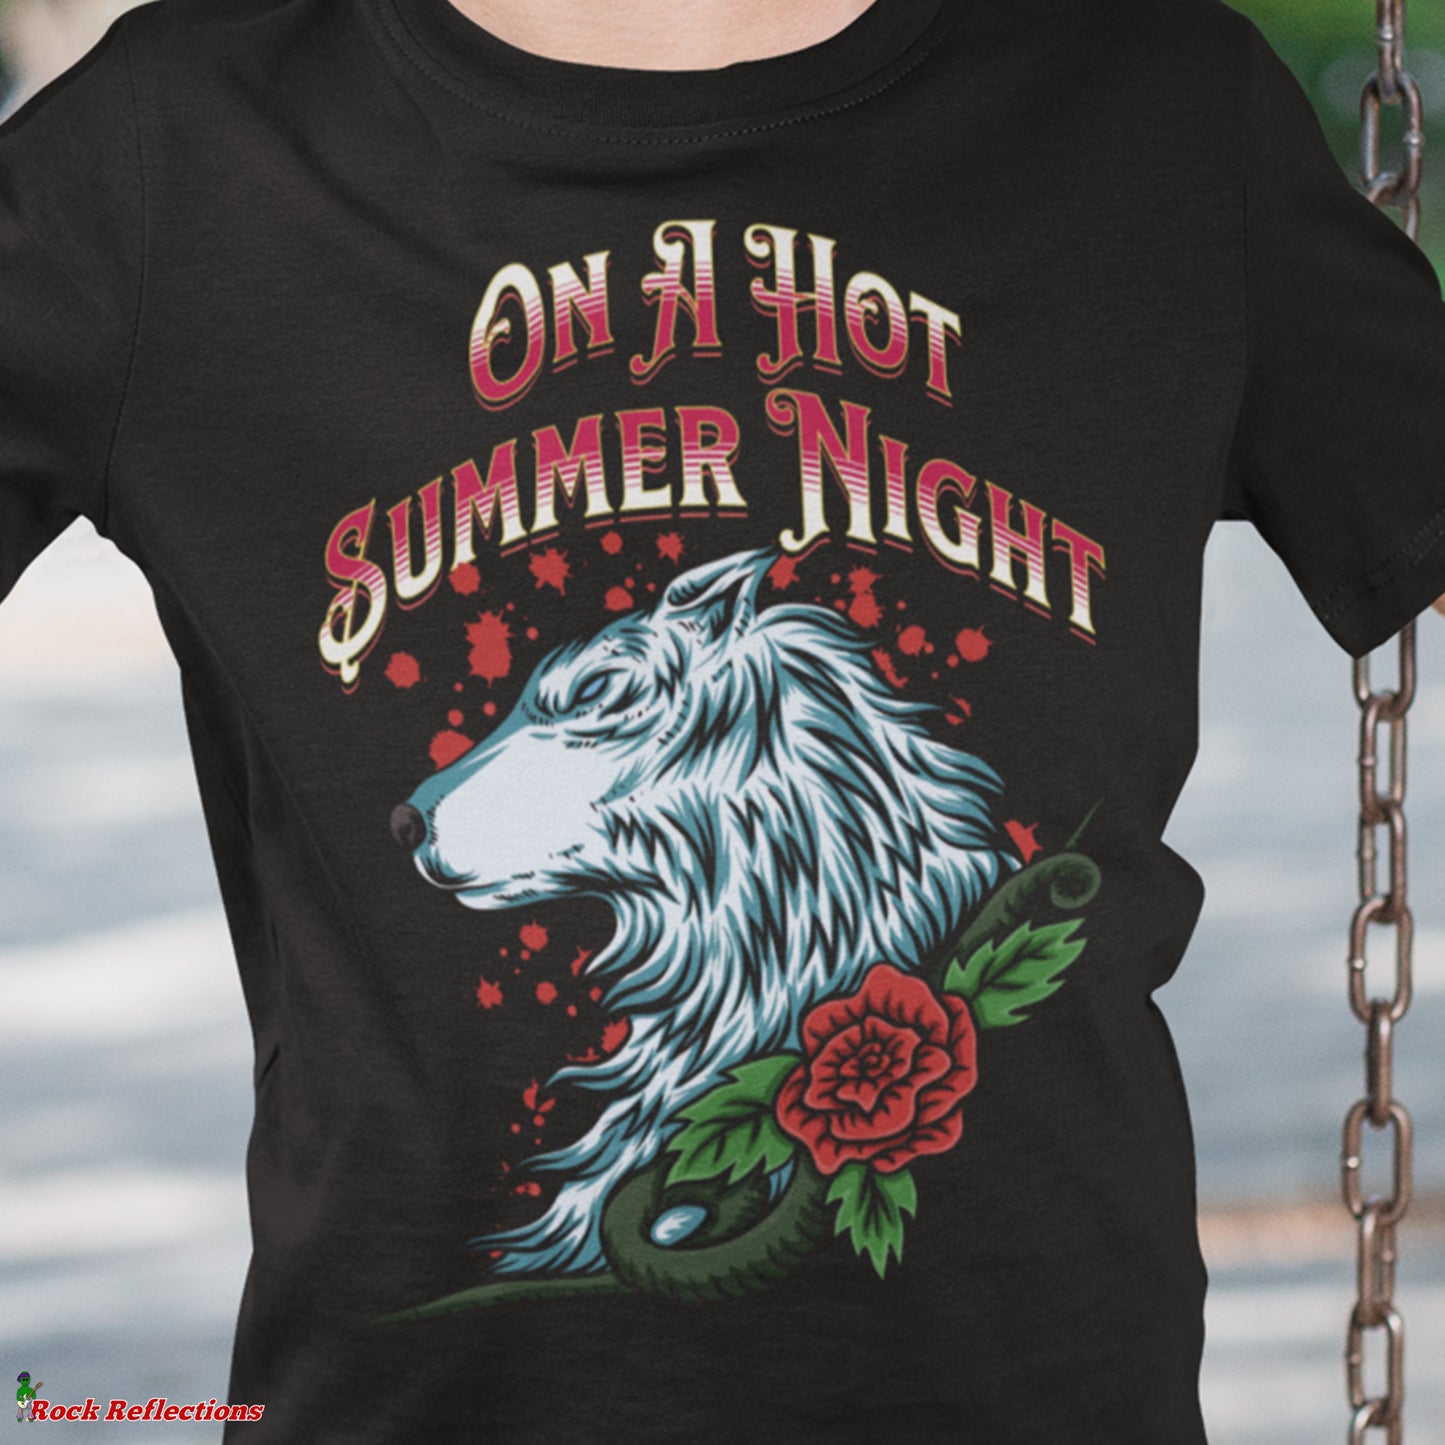 Hot Summer Night T-Shirt SPOD